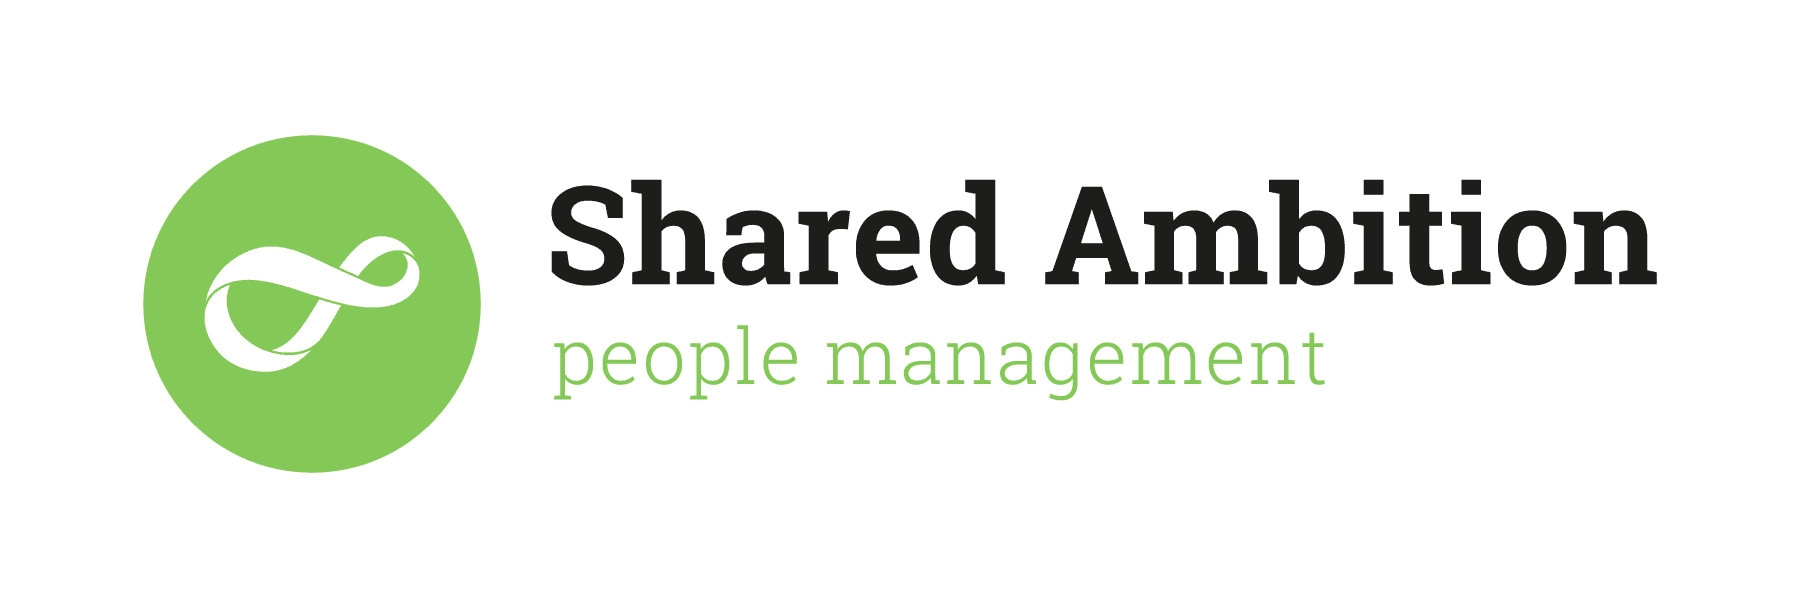 Shared Ambition logo